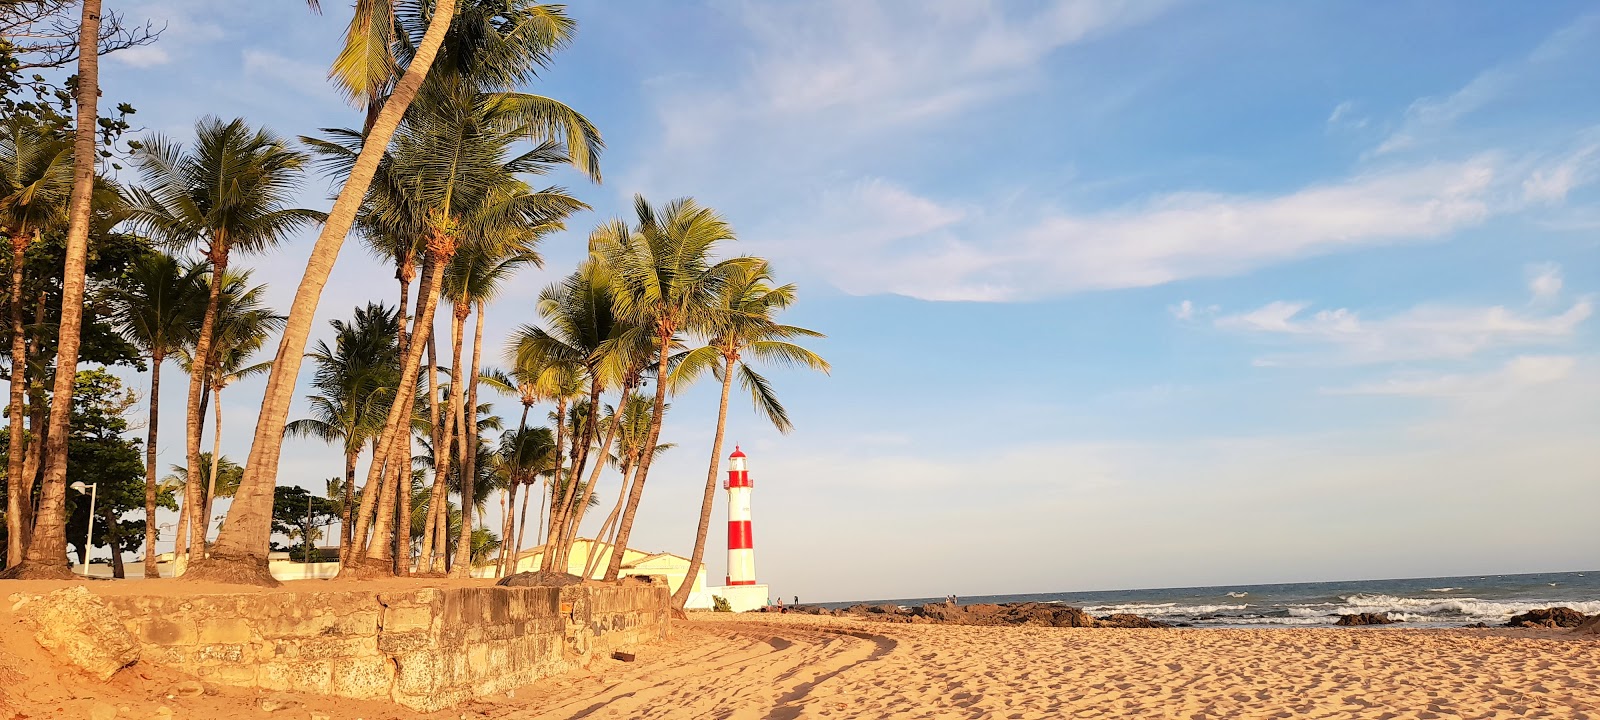 Foto de Praia Farol de Itapuã - lugar popular entre os apreciadores de relaxamento